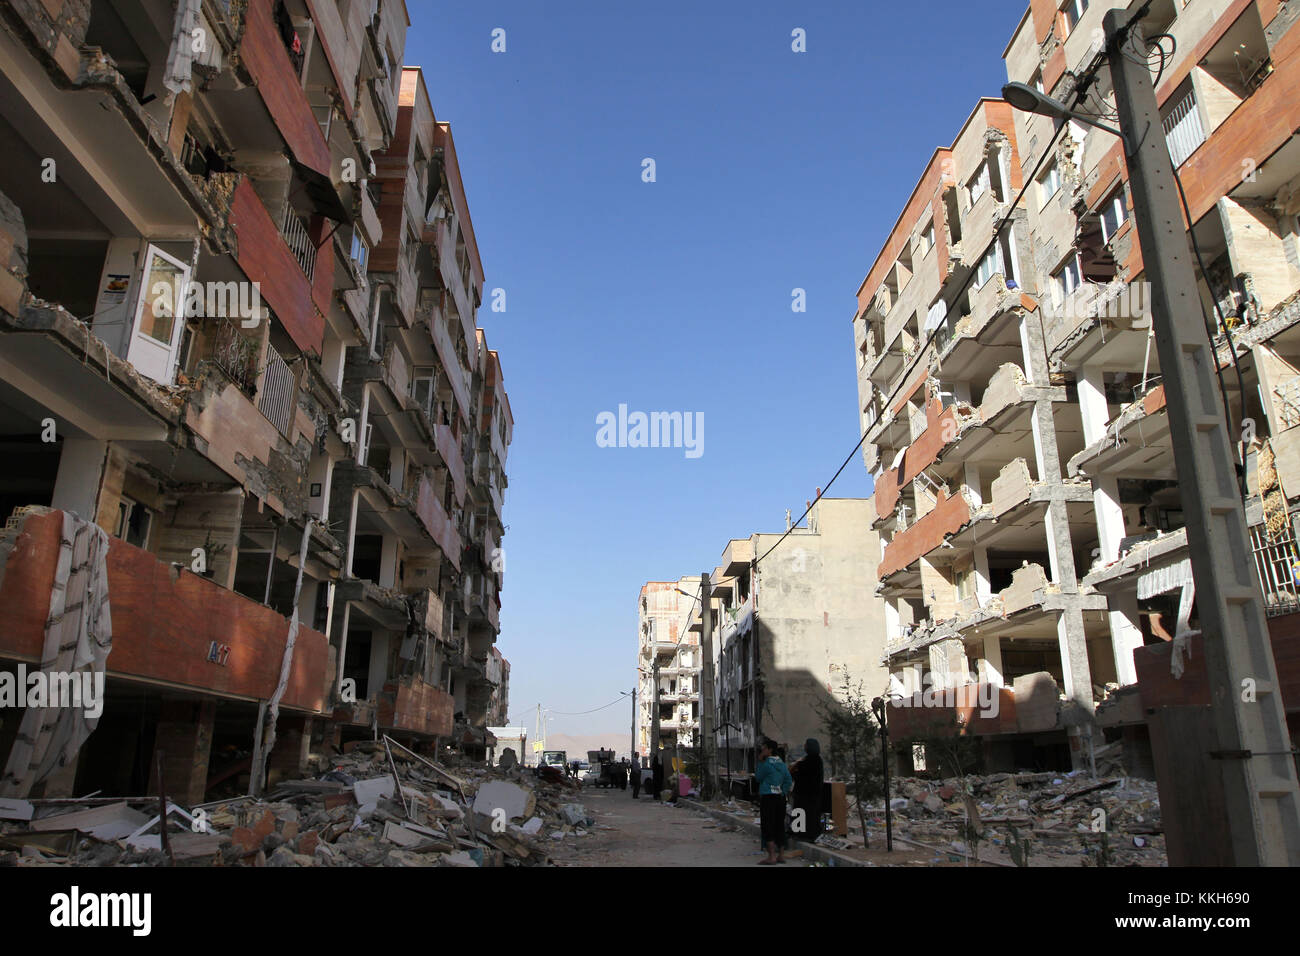 17 novembre 2017 - sarpol-e zahab, Kermanshah, iran - bâtiments endommagés de maskan-e- mehr complexe résidentiel de sarpol-e zahab. crédit : saghar amirazimi/zuma/Alamy fil live news Banque D'Images